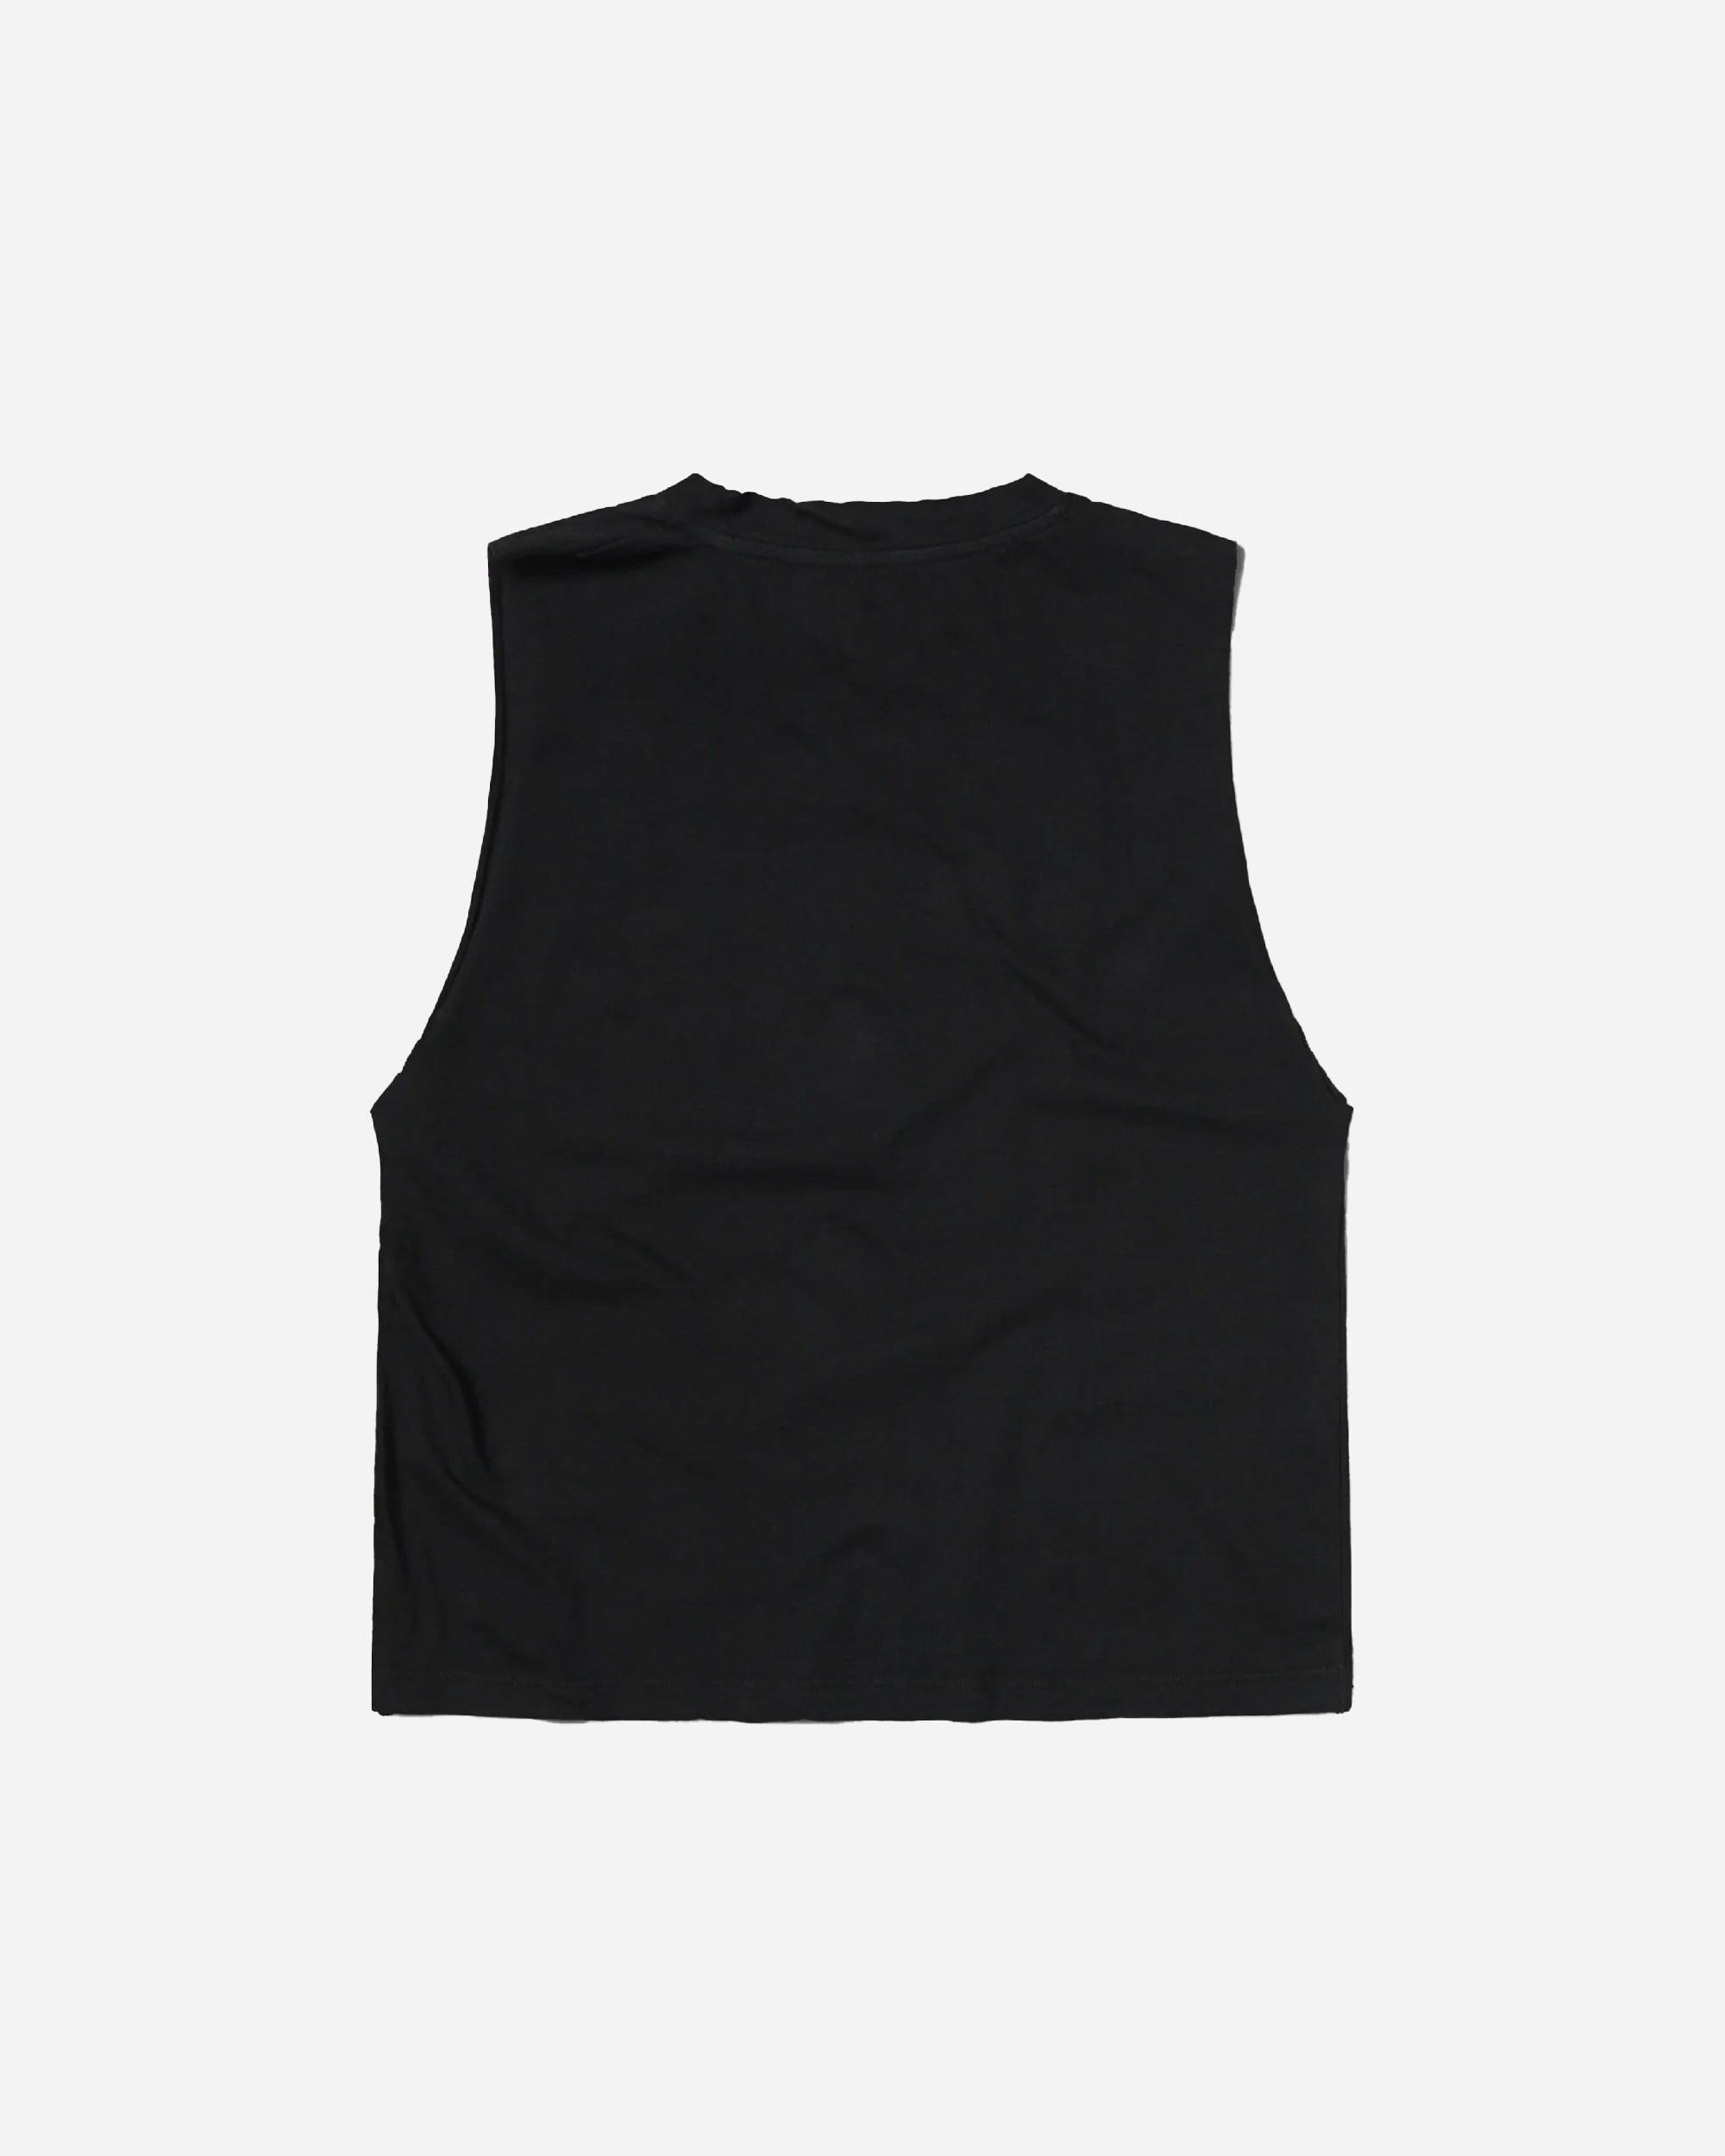 ARIES Aged Giger Muscle Vest Black SUAR40001-BLK